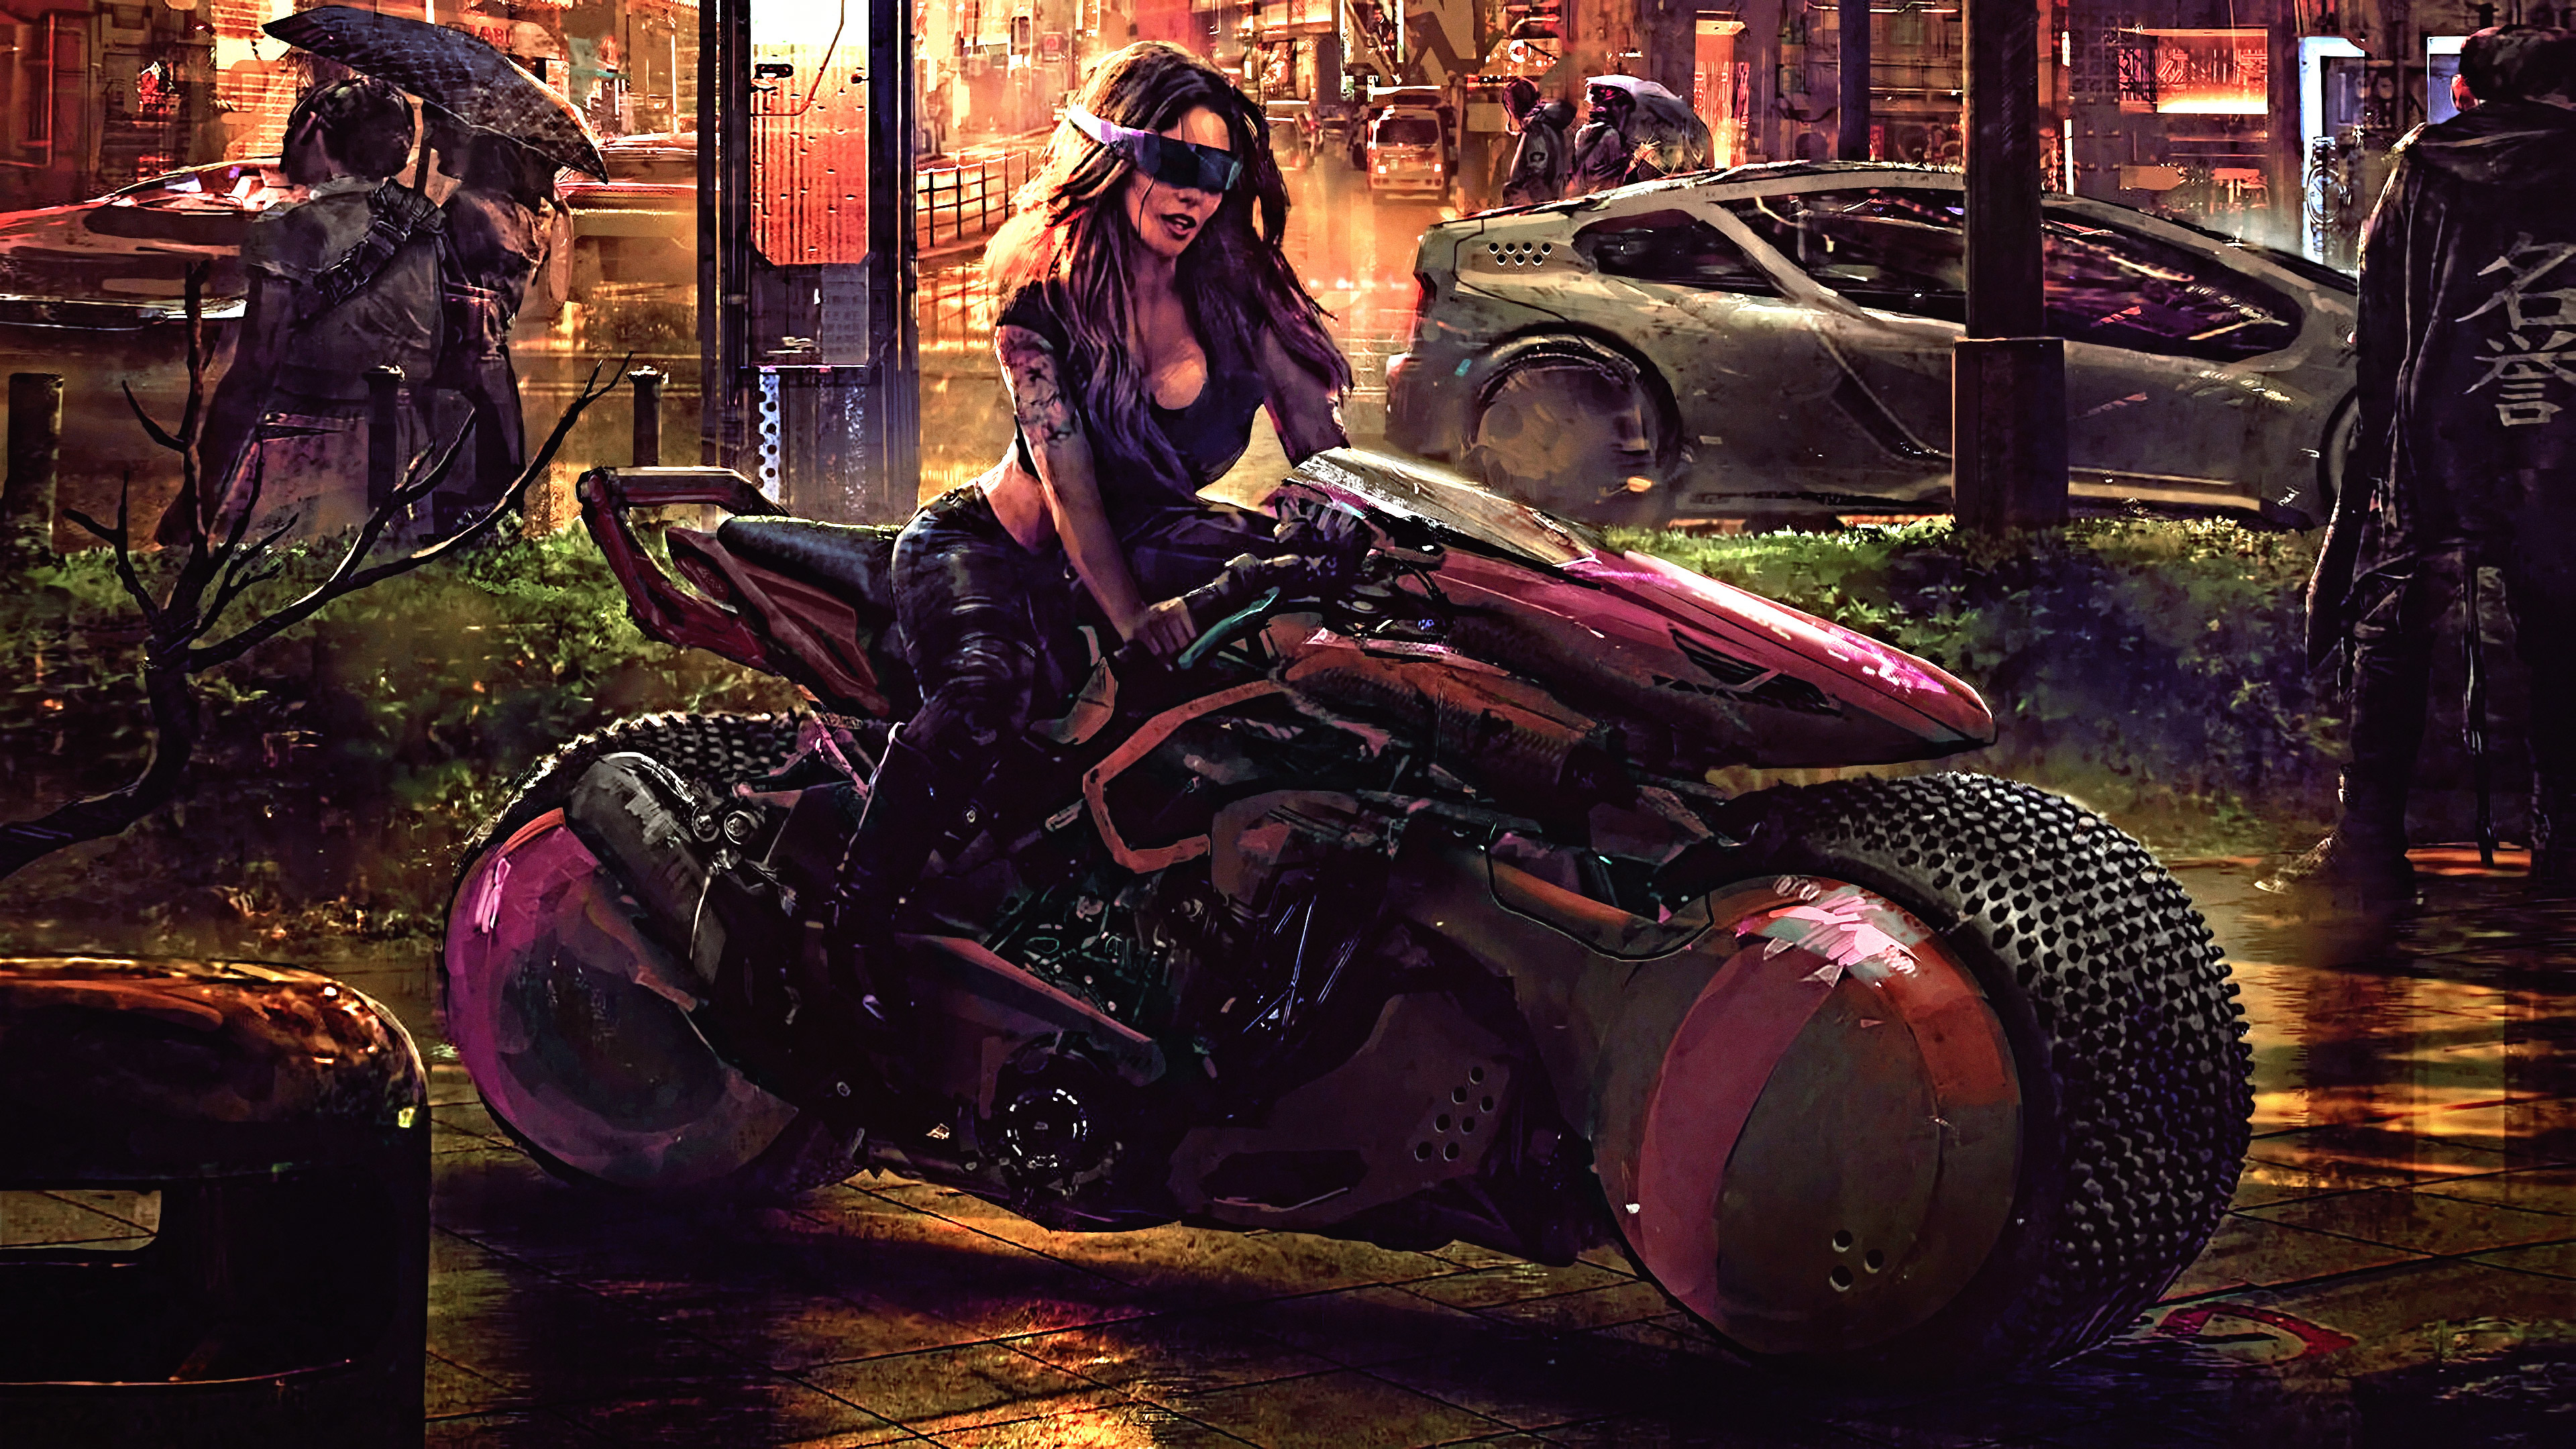 HD wallpaper: Biker girl, cyberpunk, Girl With Weapon